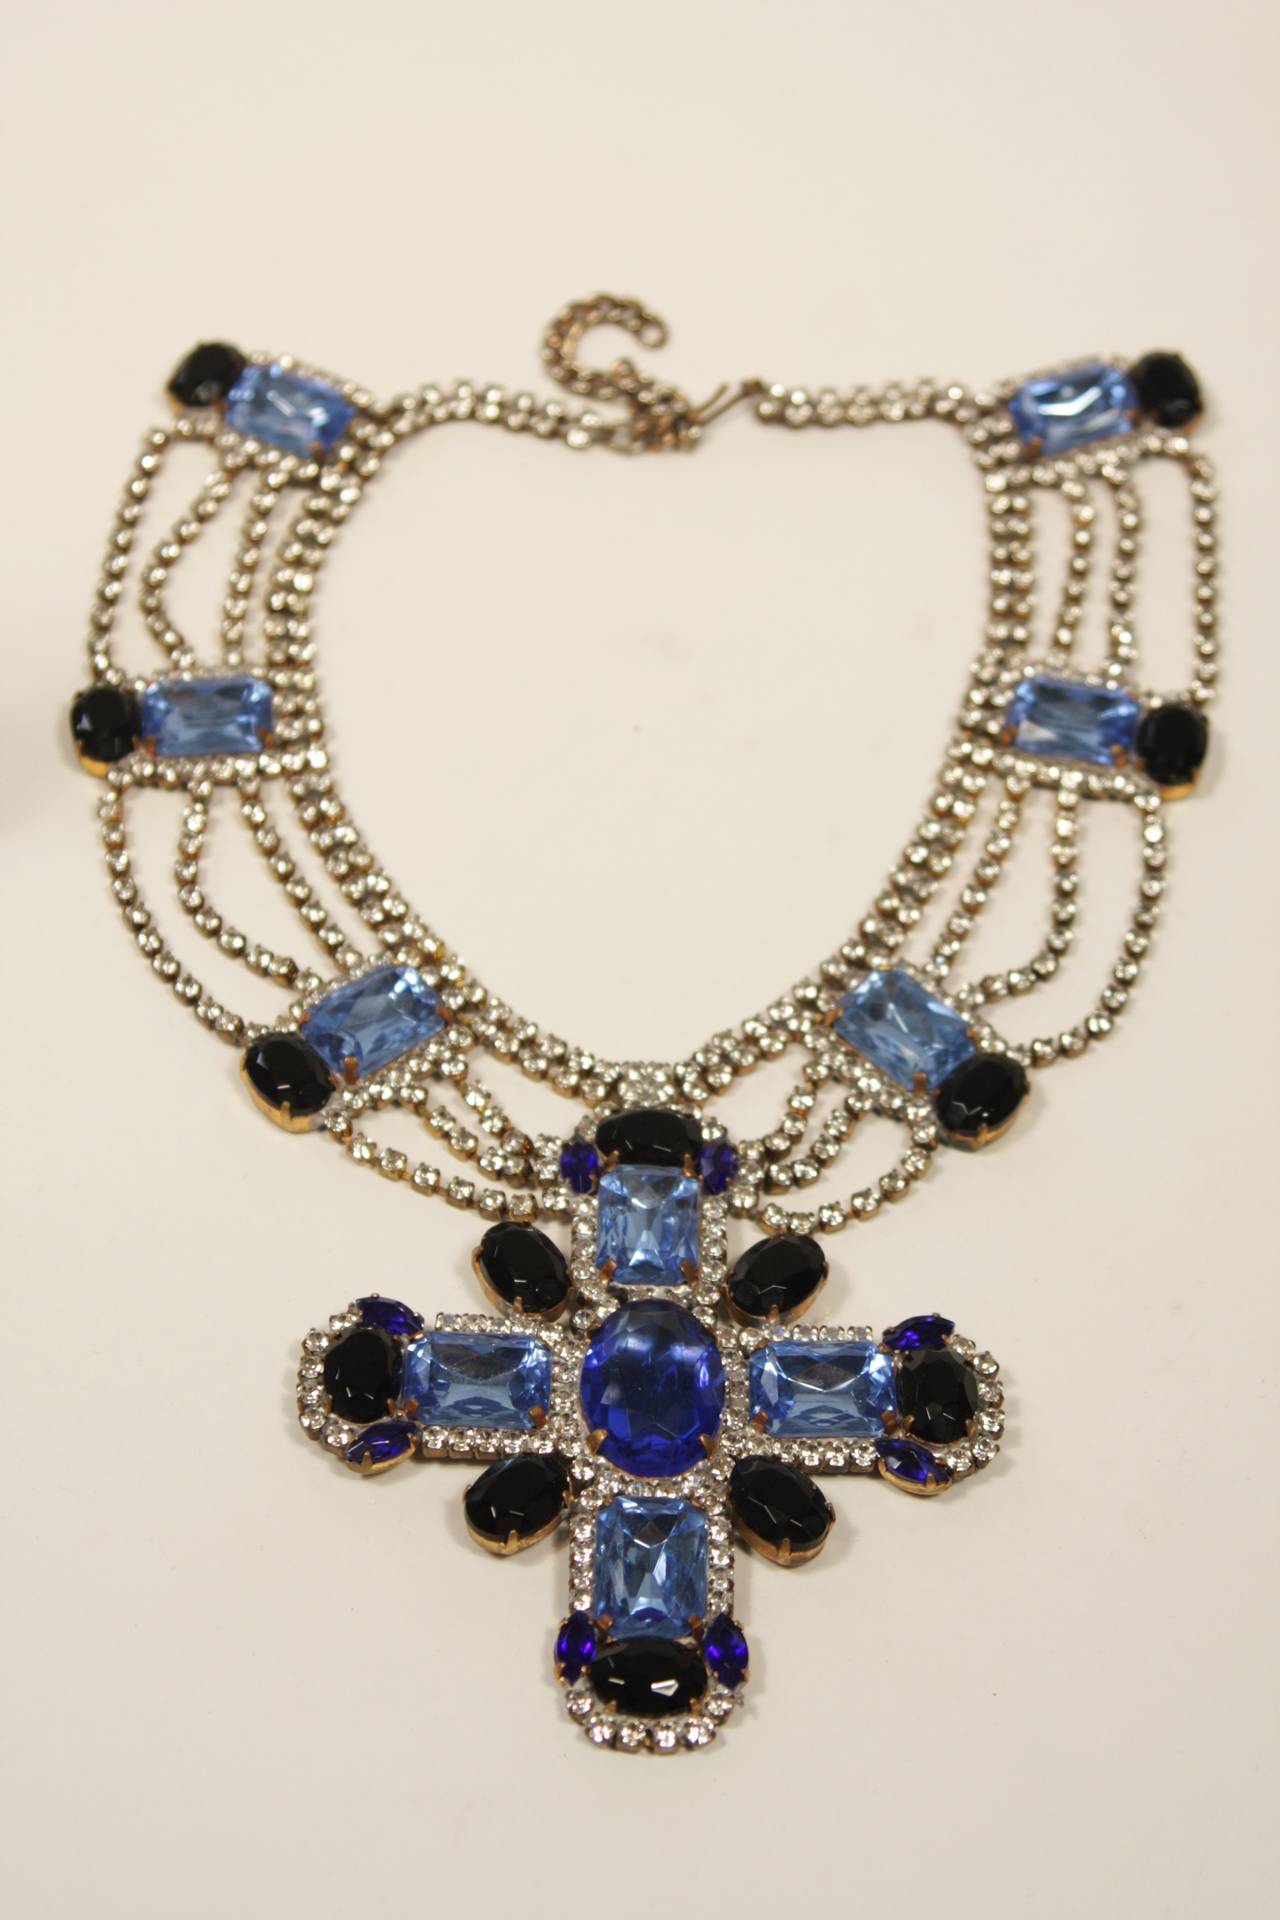 Women's Bijoux M.G. Czech Rhinestone Sapphire Bib Necklace and Earring set